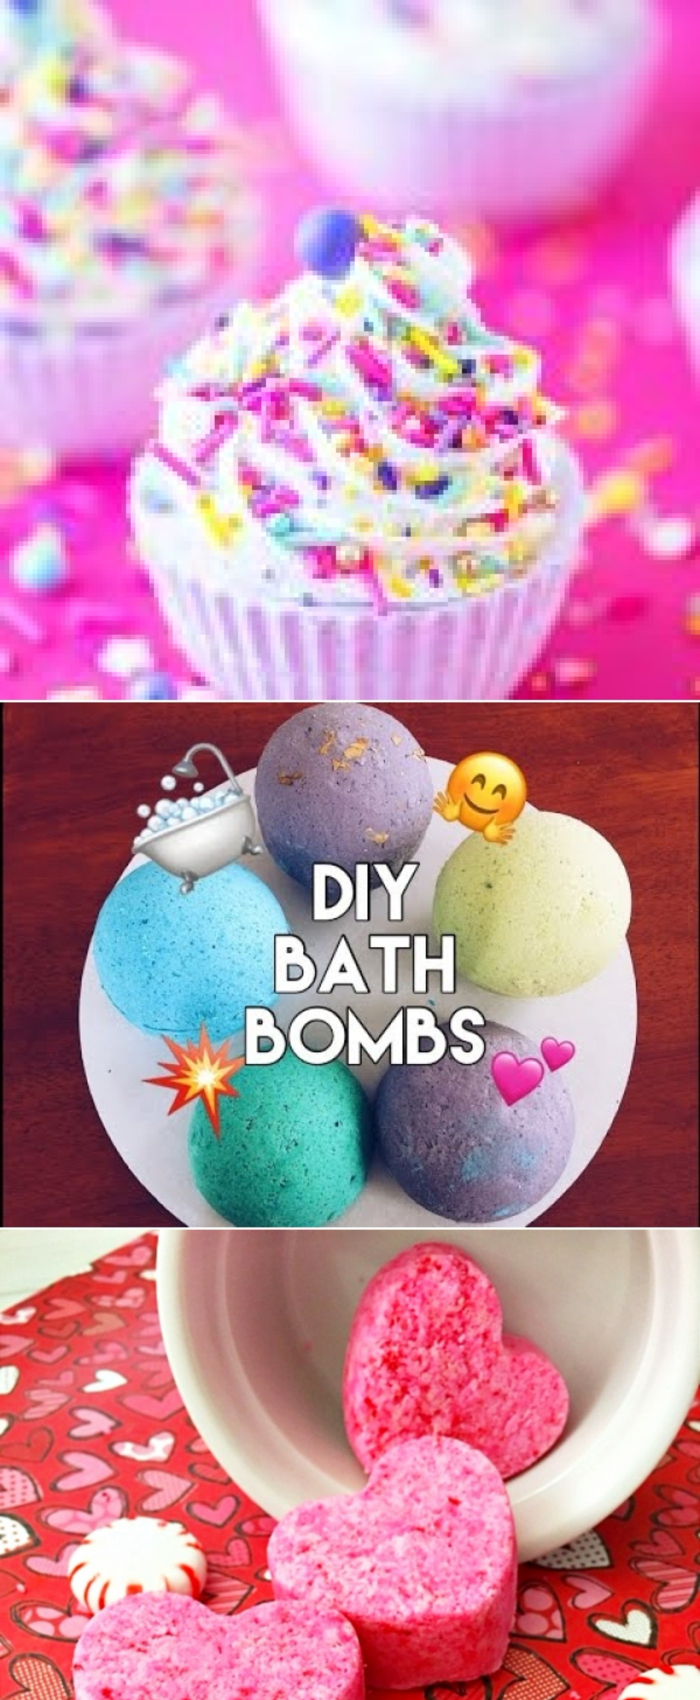 Bathbombs!  DIY bath bomb ideas and recipes to make homemade bath bombs and bath fizzies